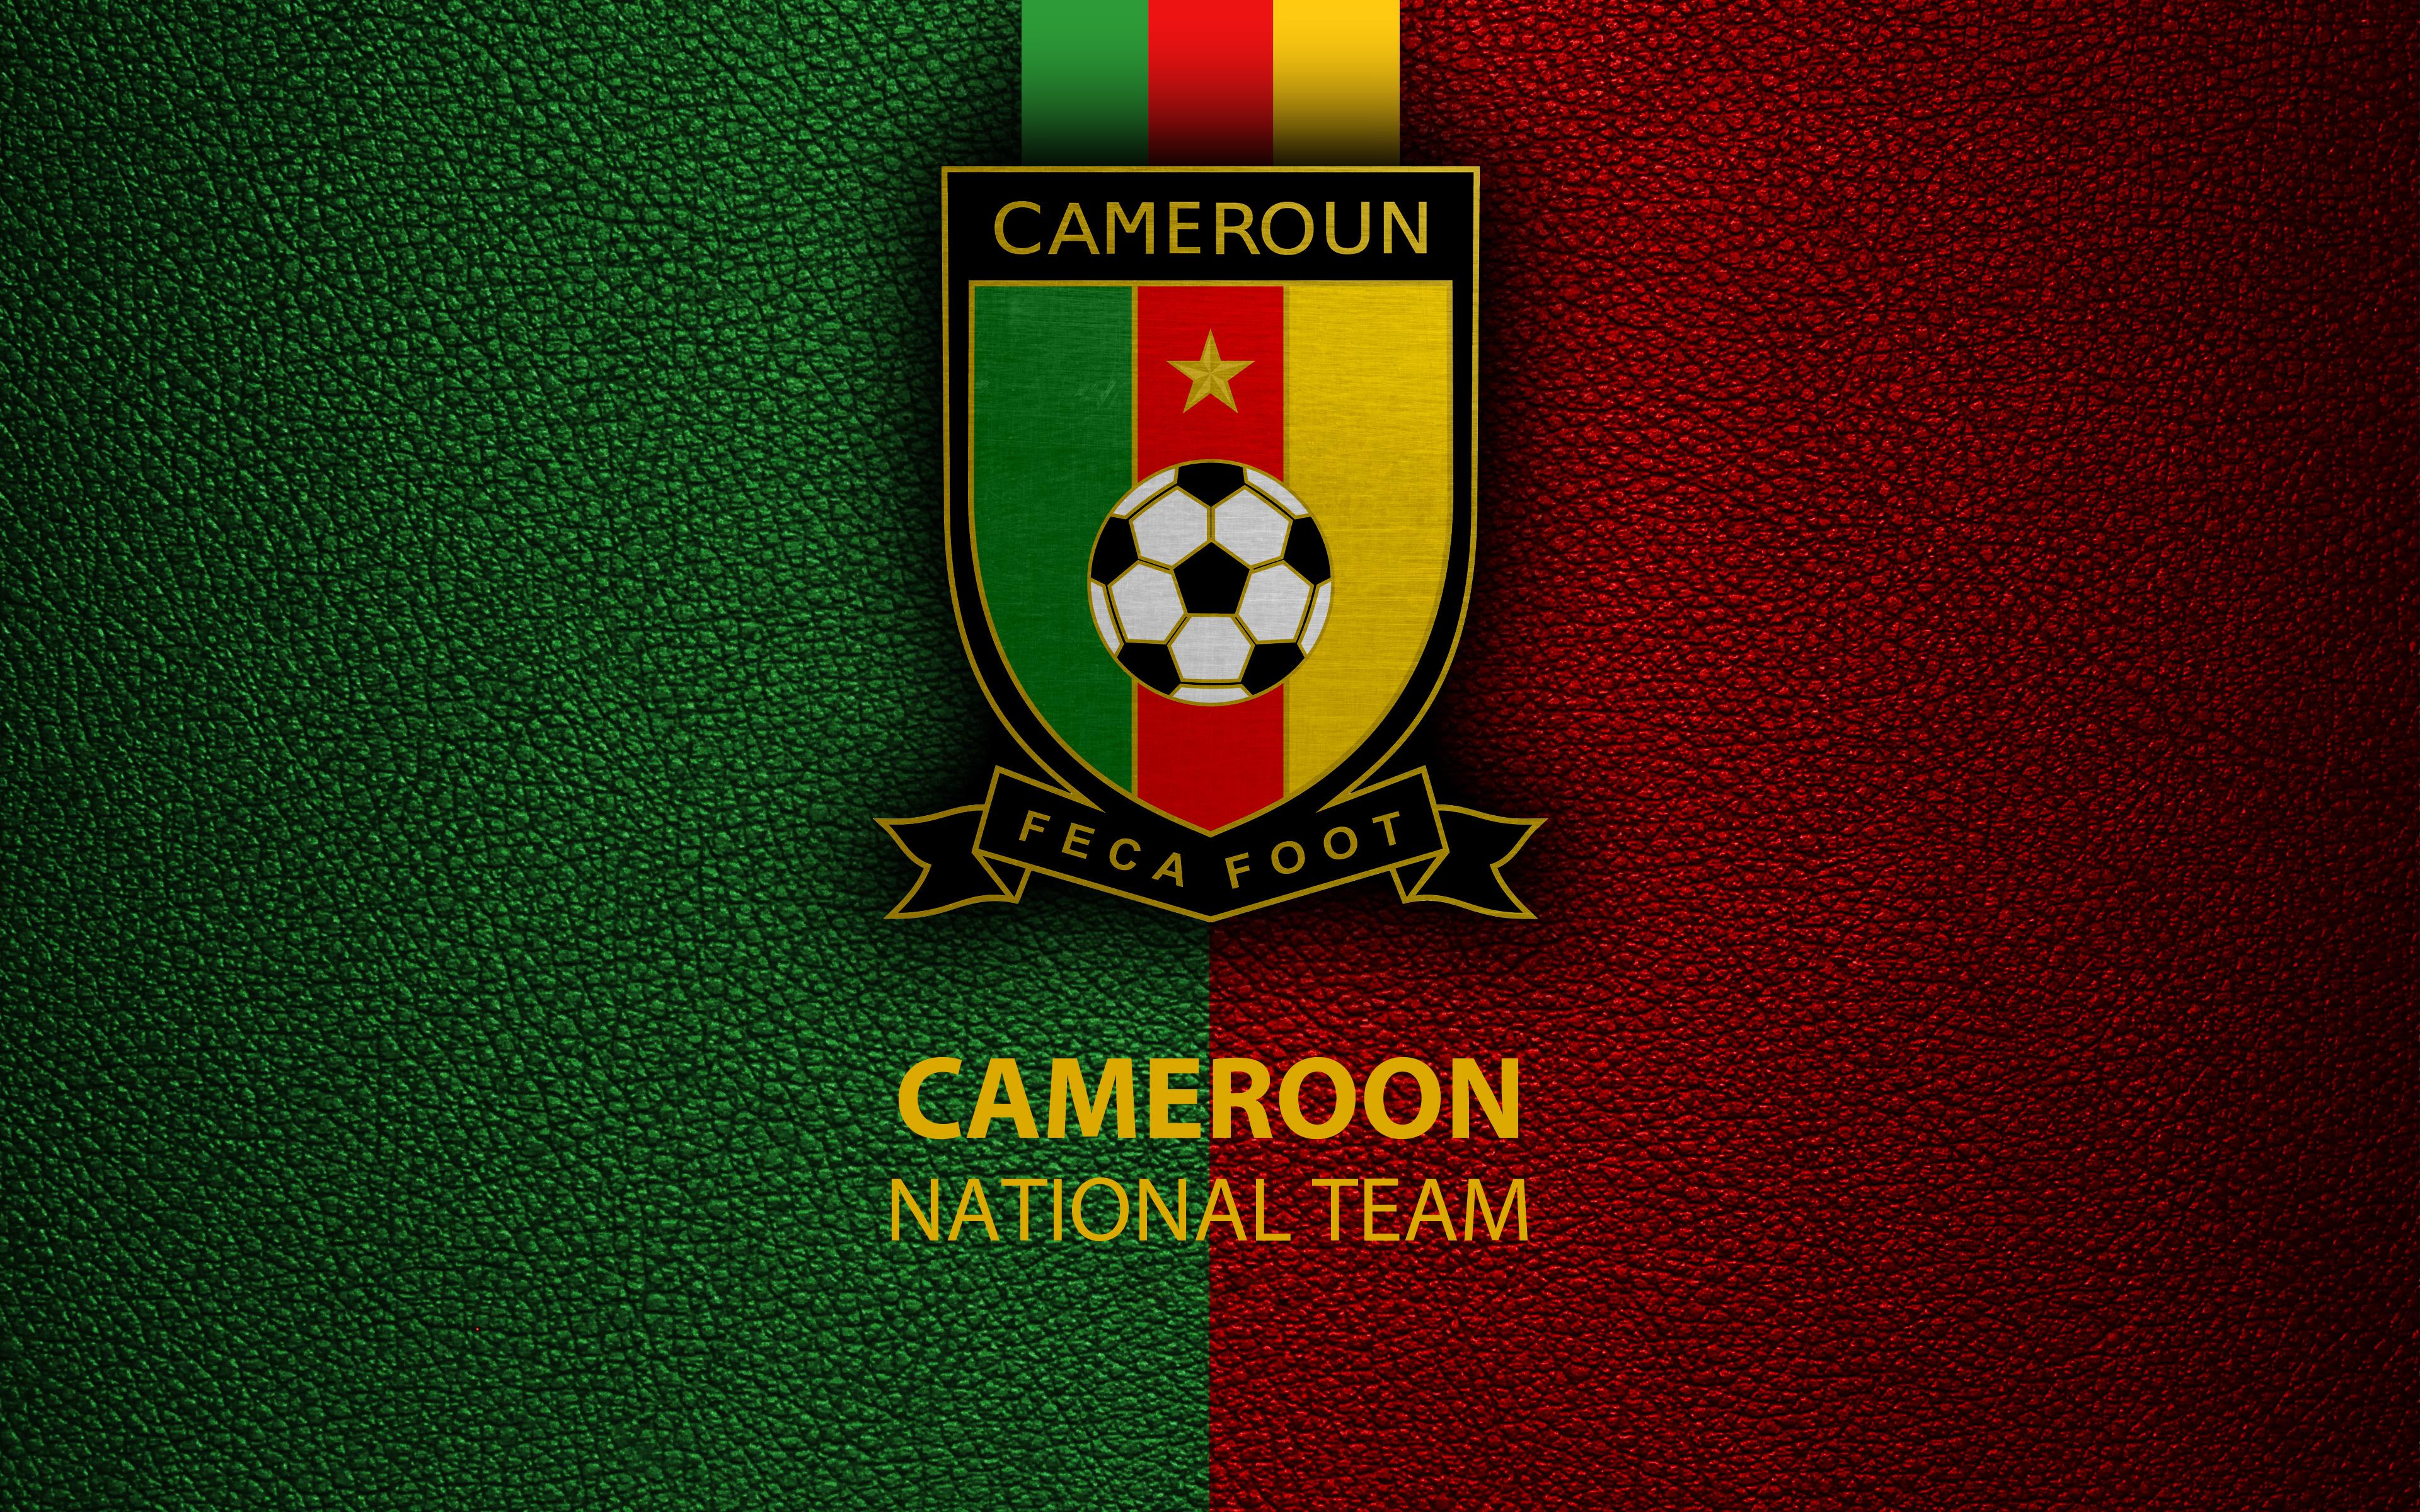 Cameroon National Football Team 4k Ultra HD Wallpaper. Background